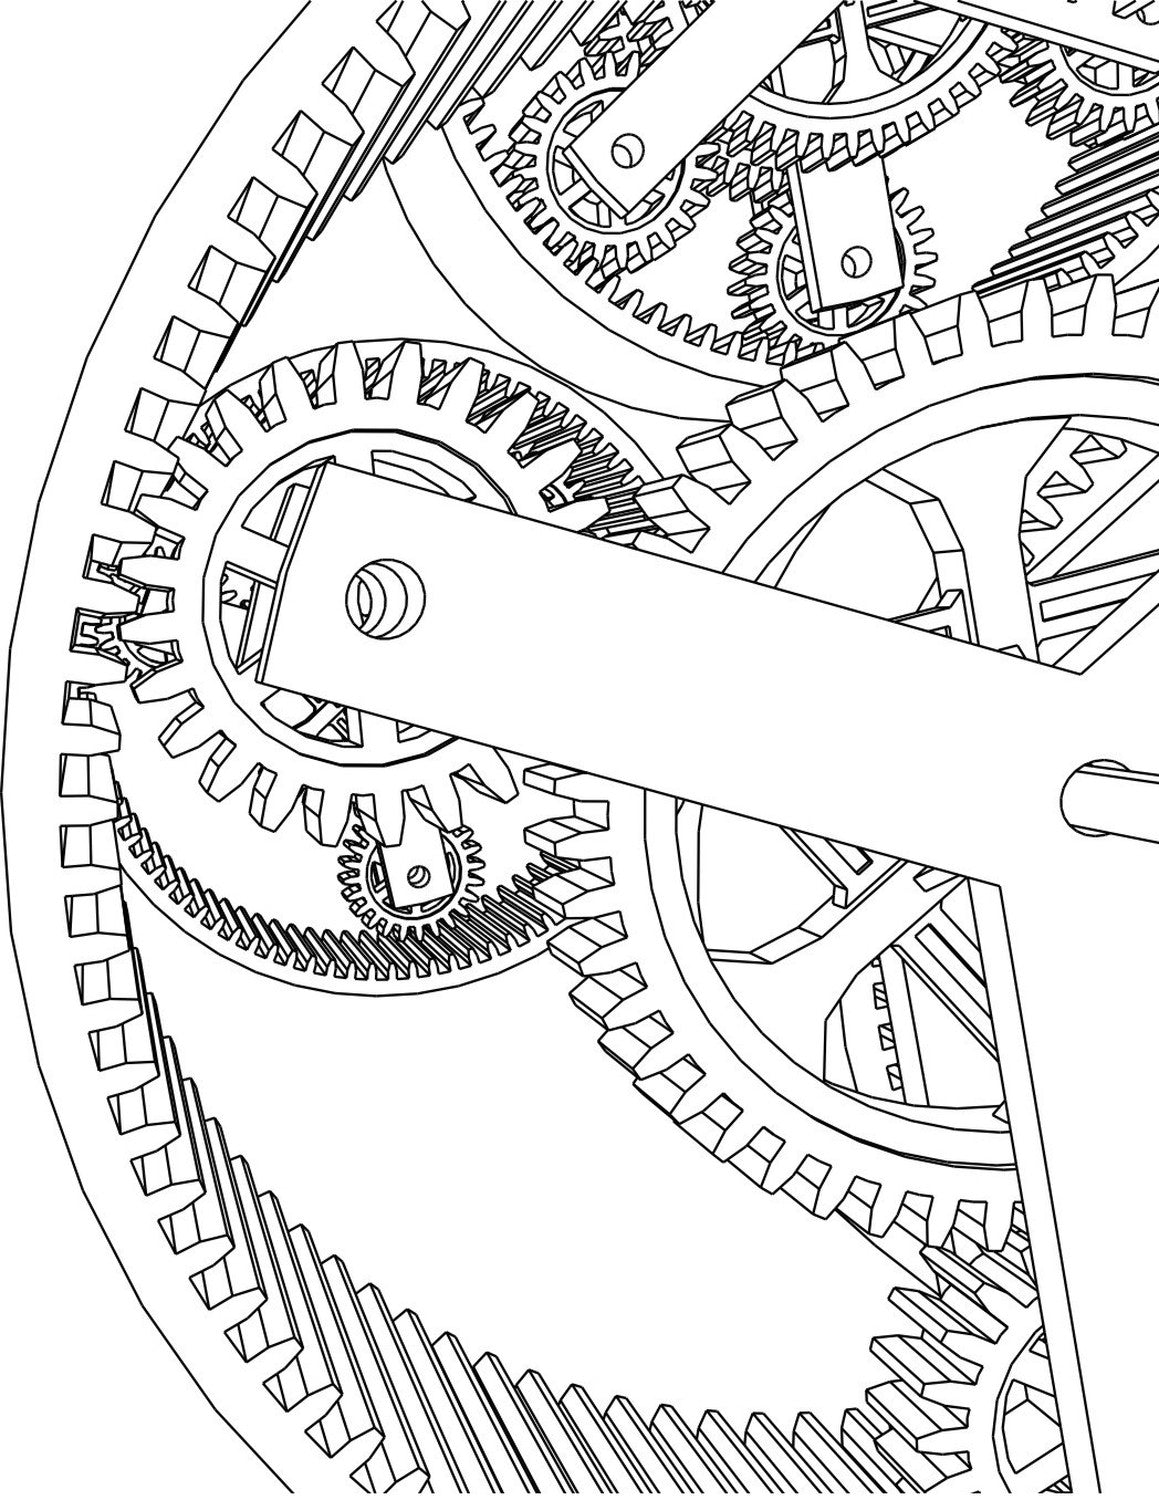 Clockwork Mechanics - Machine Cogwheels Technical Patterns, 3D Parts Blueprints - PDF Book